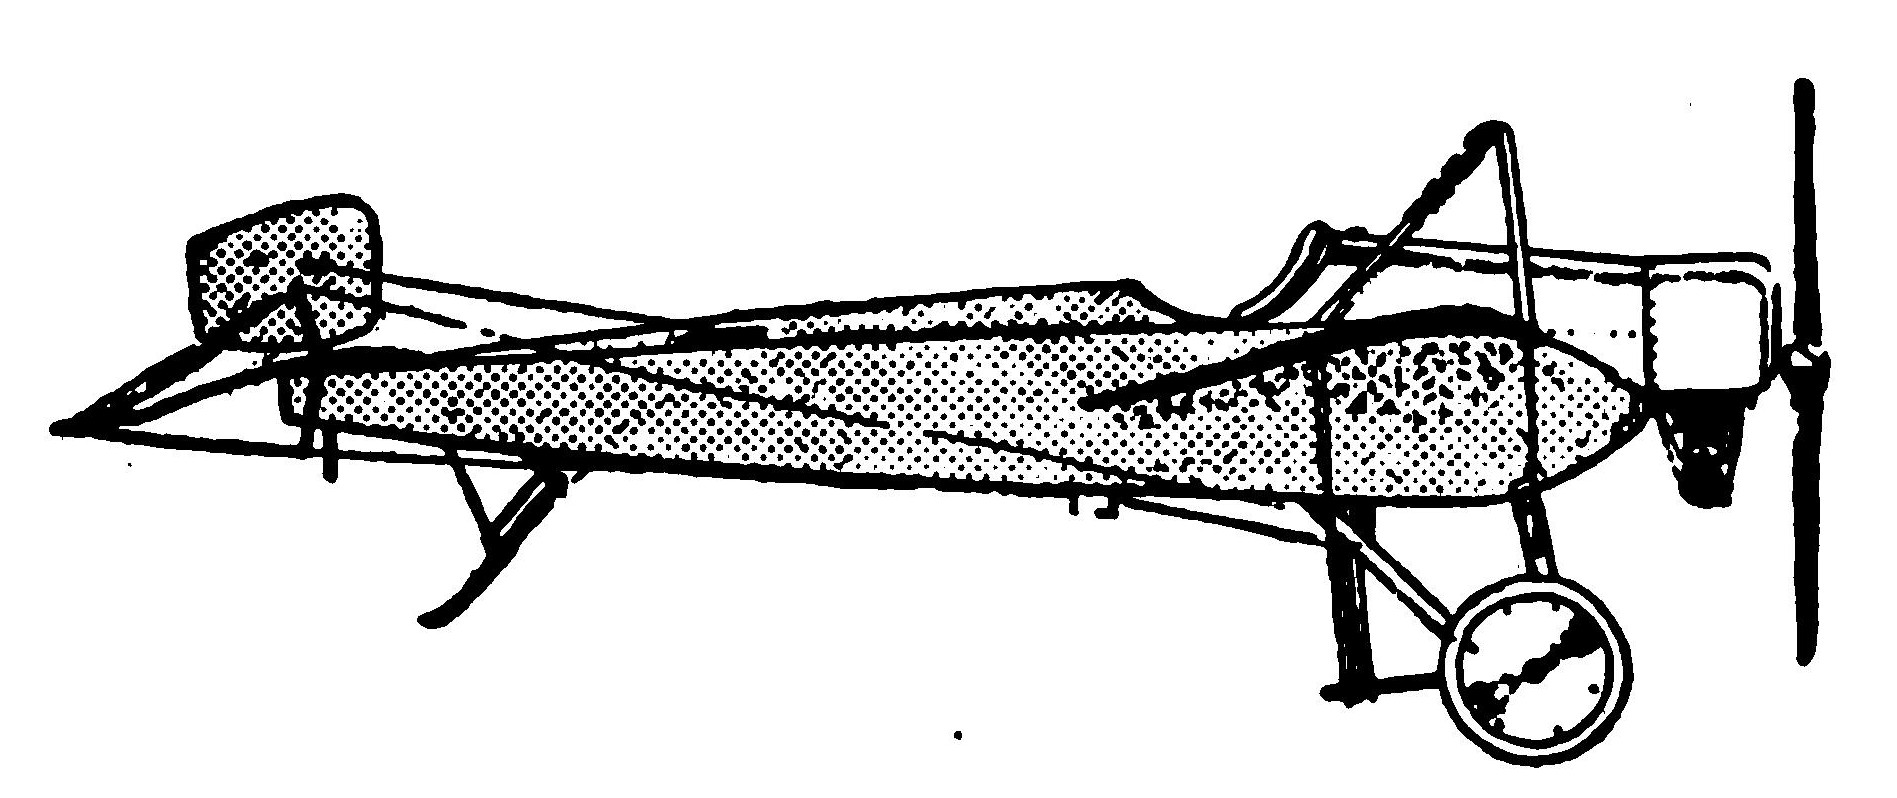 Fig. 3. Caudron Monoplane. Side Elevation.